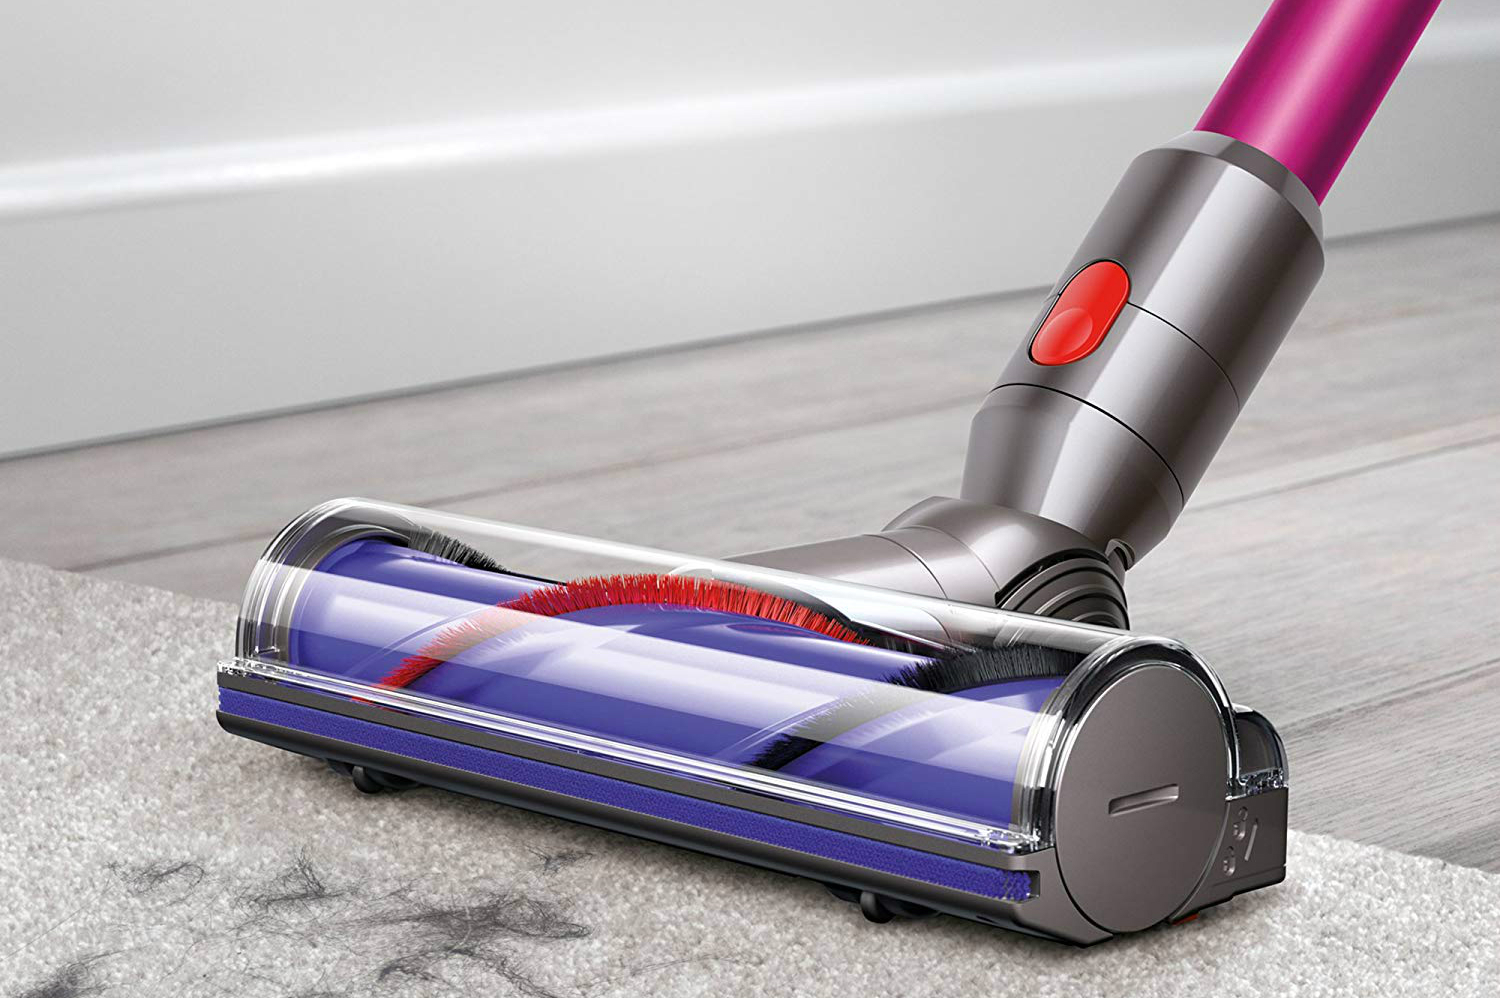 dyson vacuum cleaner deals on amazon v7 motorhead cordless stick fuchsia2